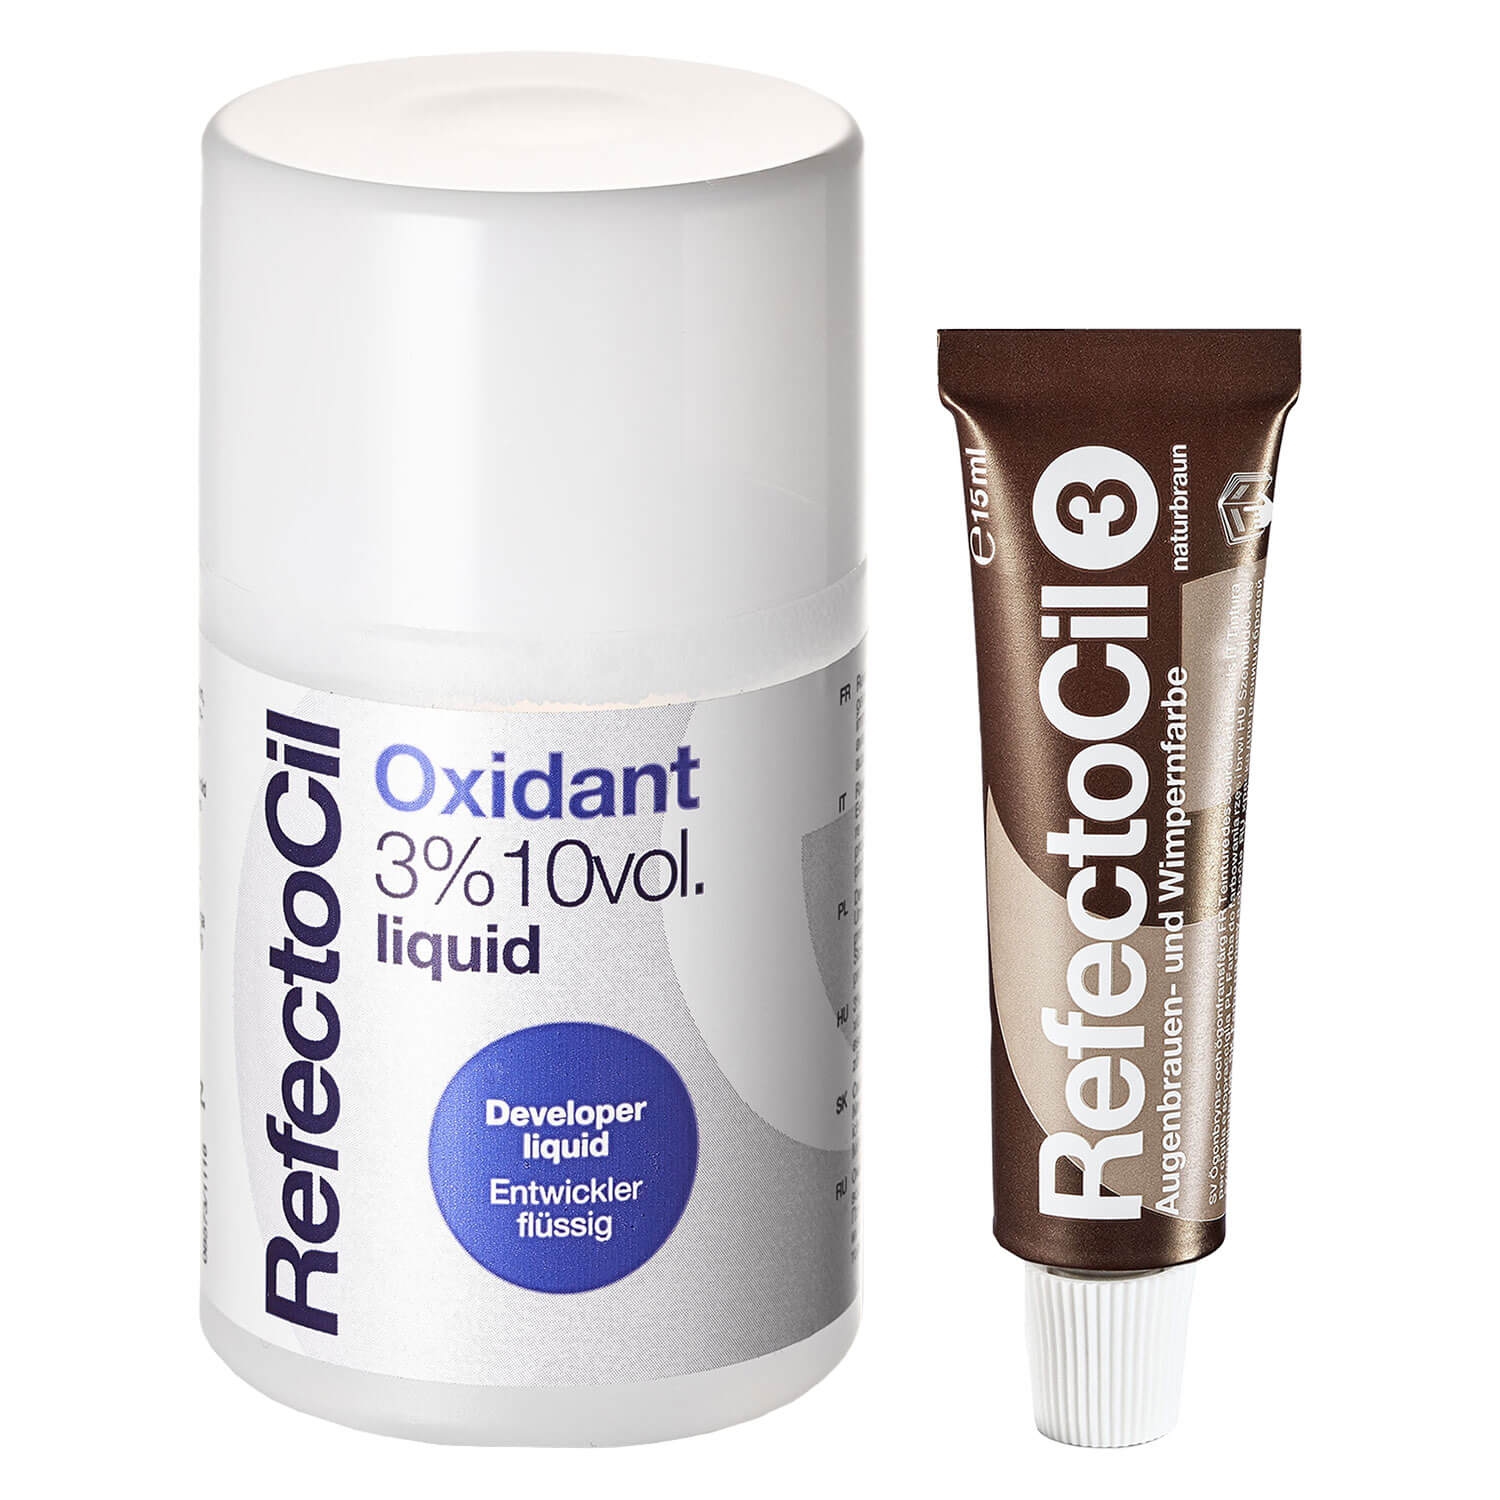 Produktbild von RefectoCil Colors - No.3 Natural Brown Eyelash & Eyebrow Tint + Oxidant 3% Liquid Special